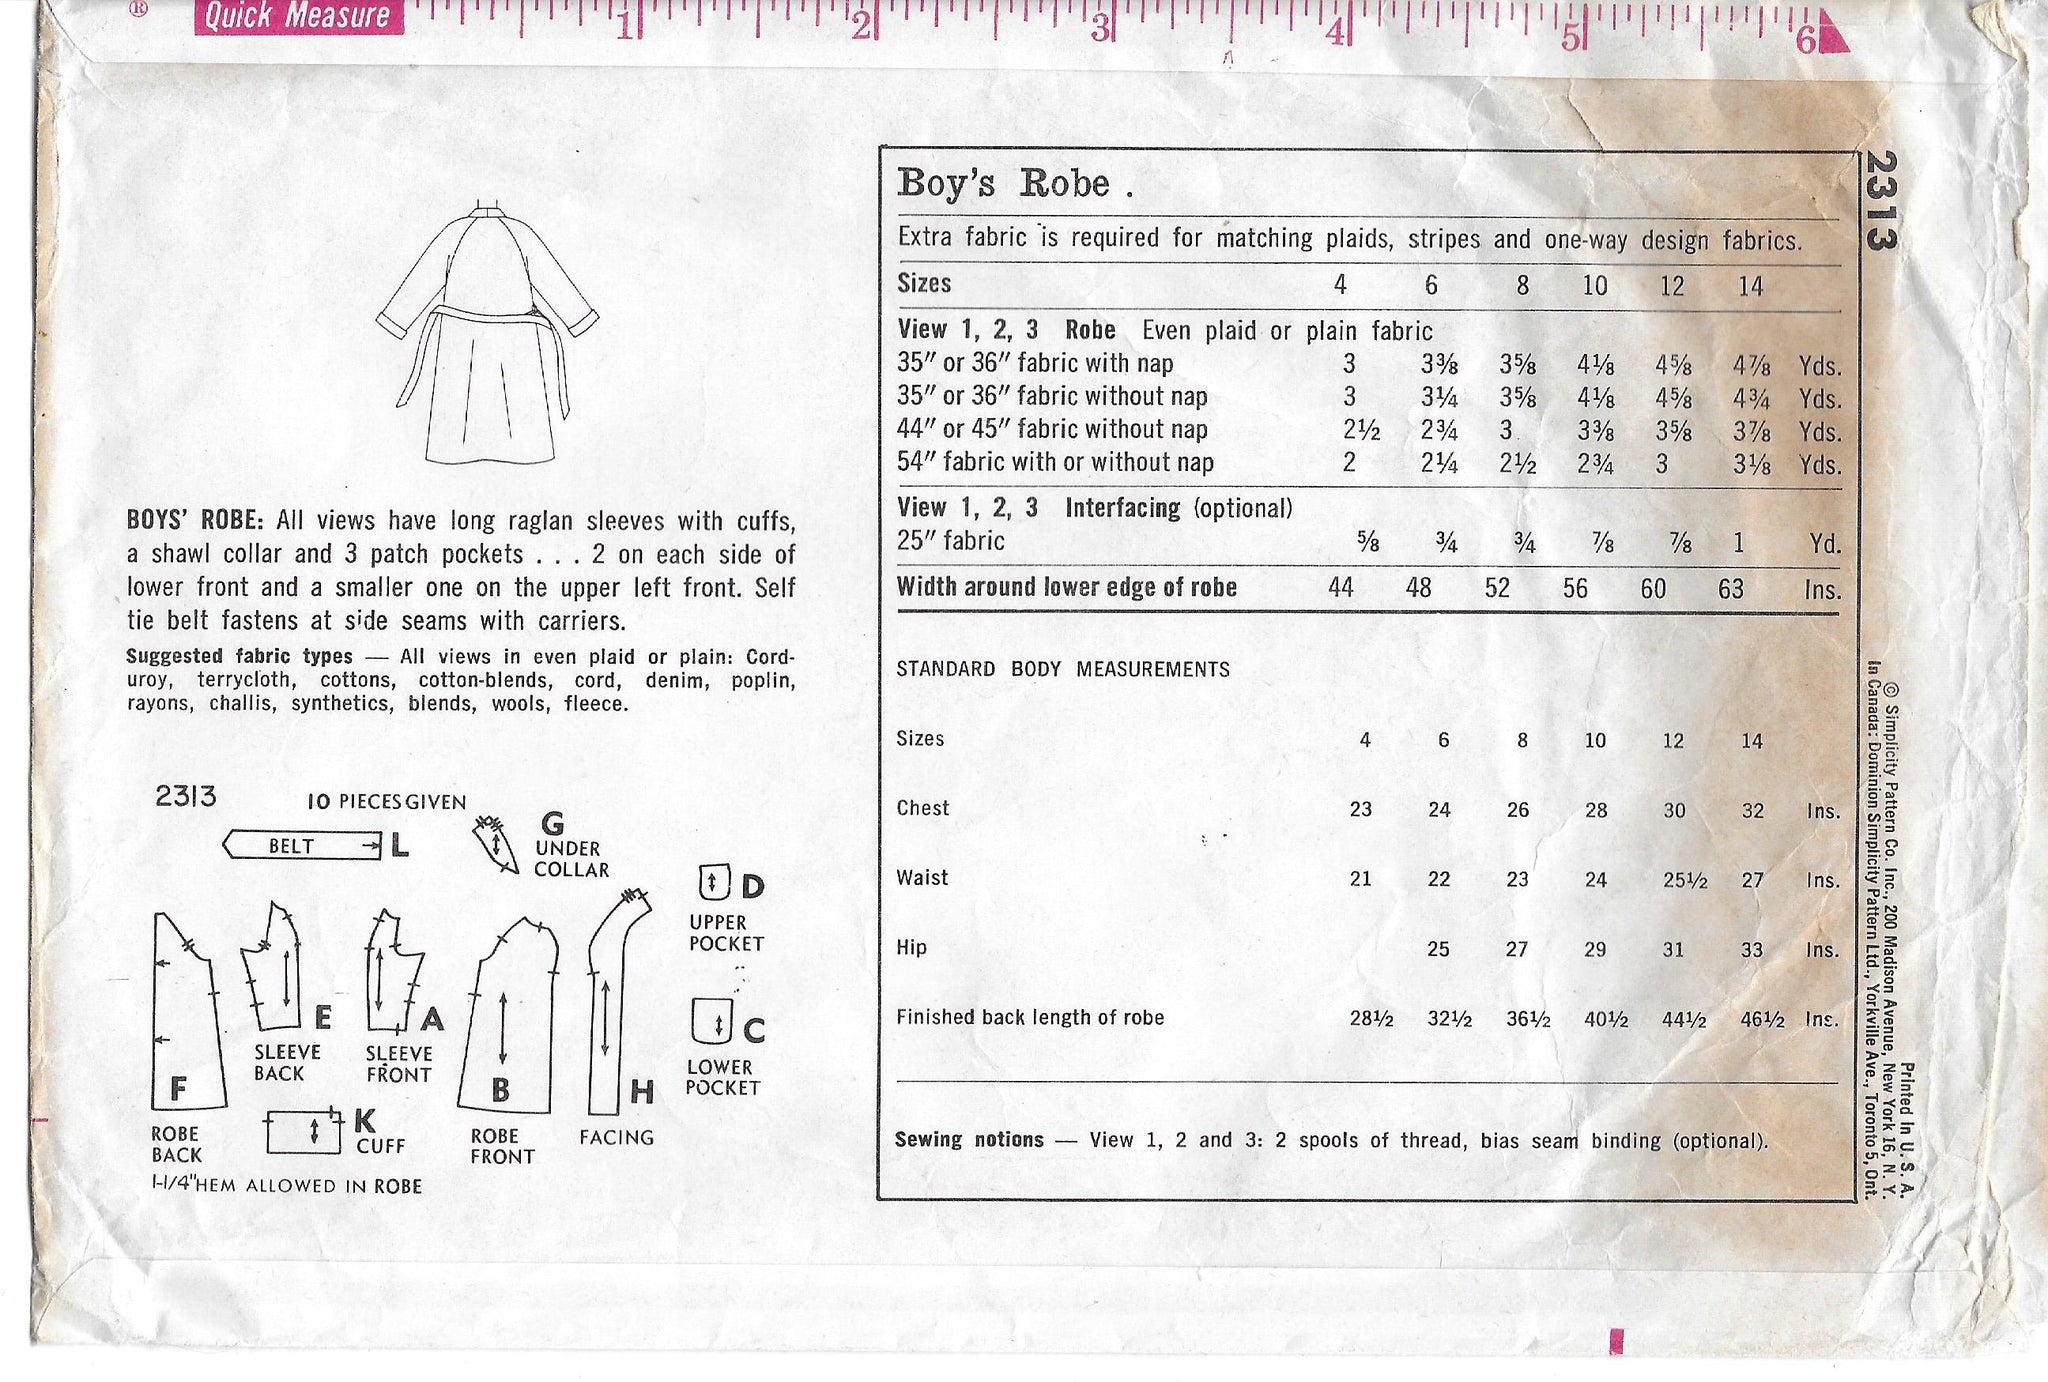 SALE 1950's Simplicity 2313 Pattern - Boy's Robe